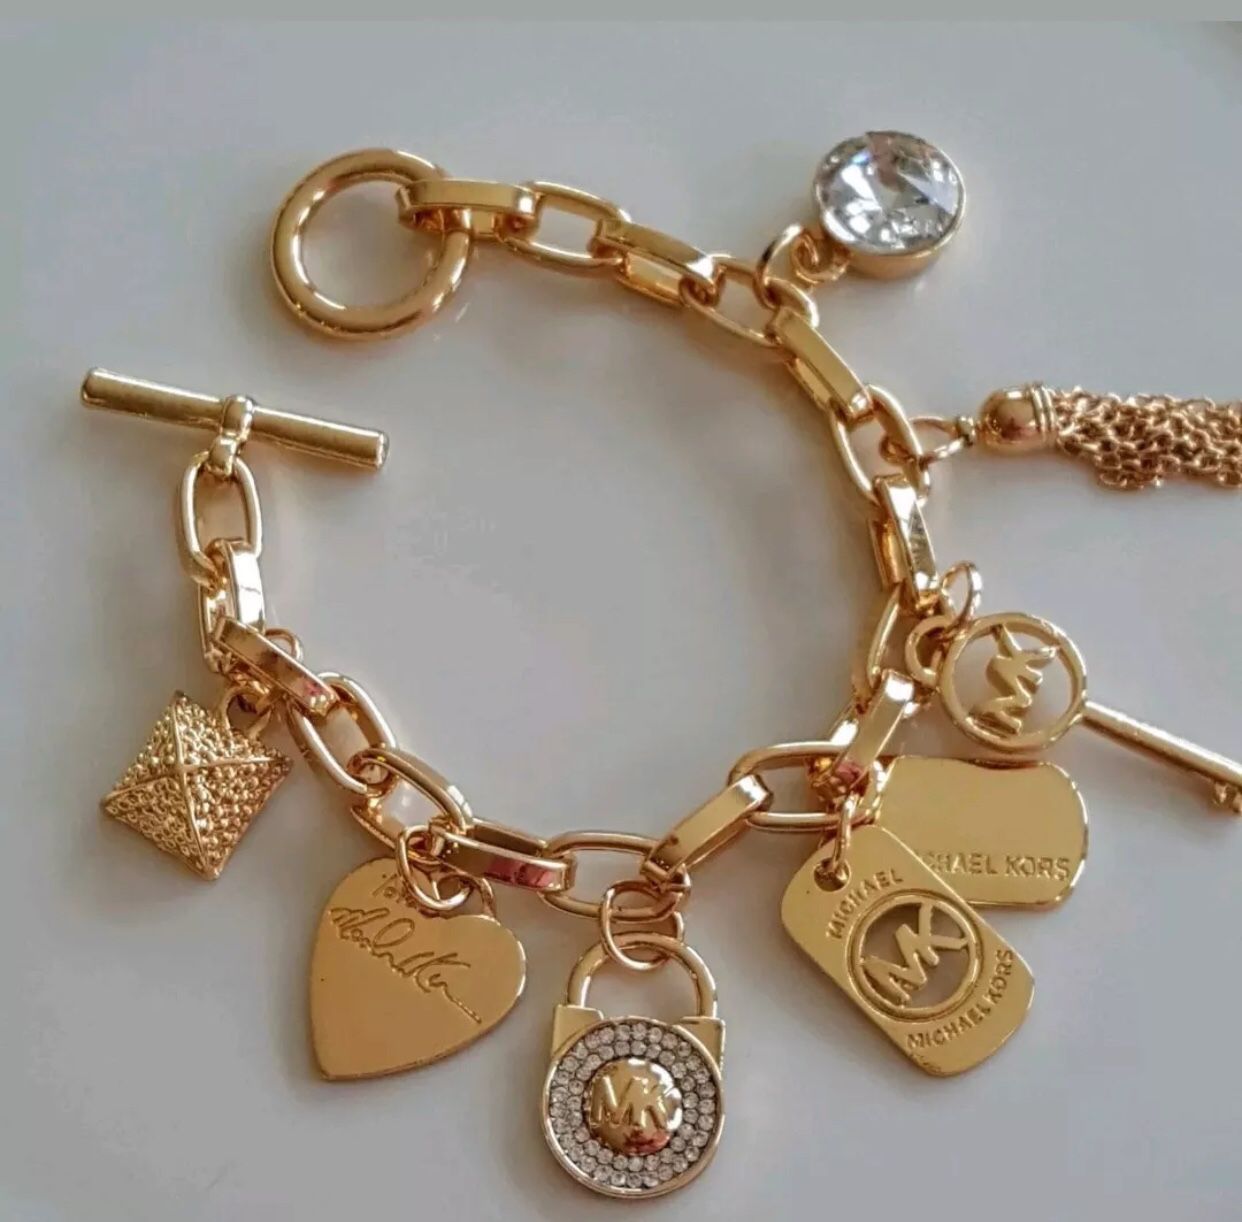 Mk Michael Kors charm bracelet +cuff bangle bracelet + ring